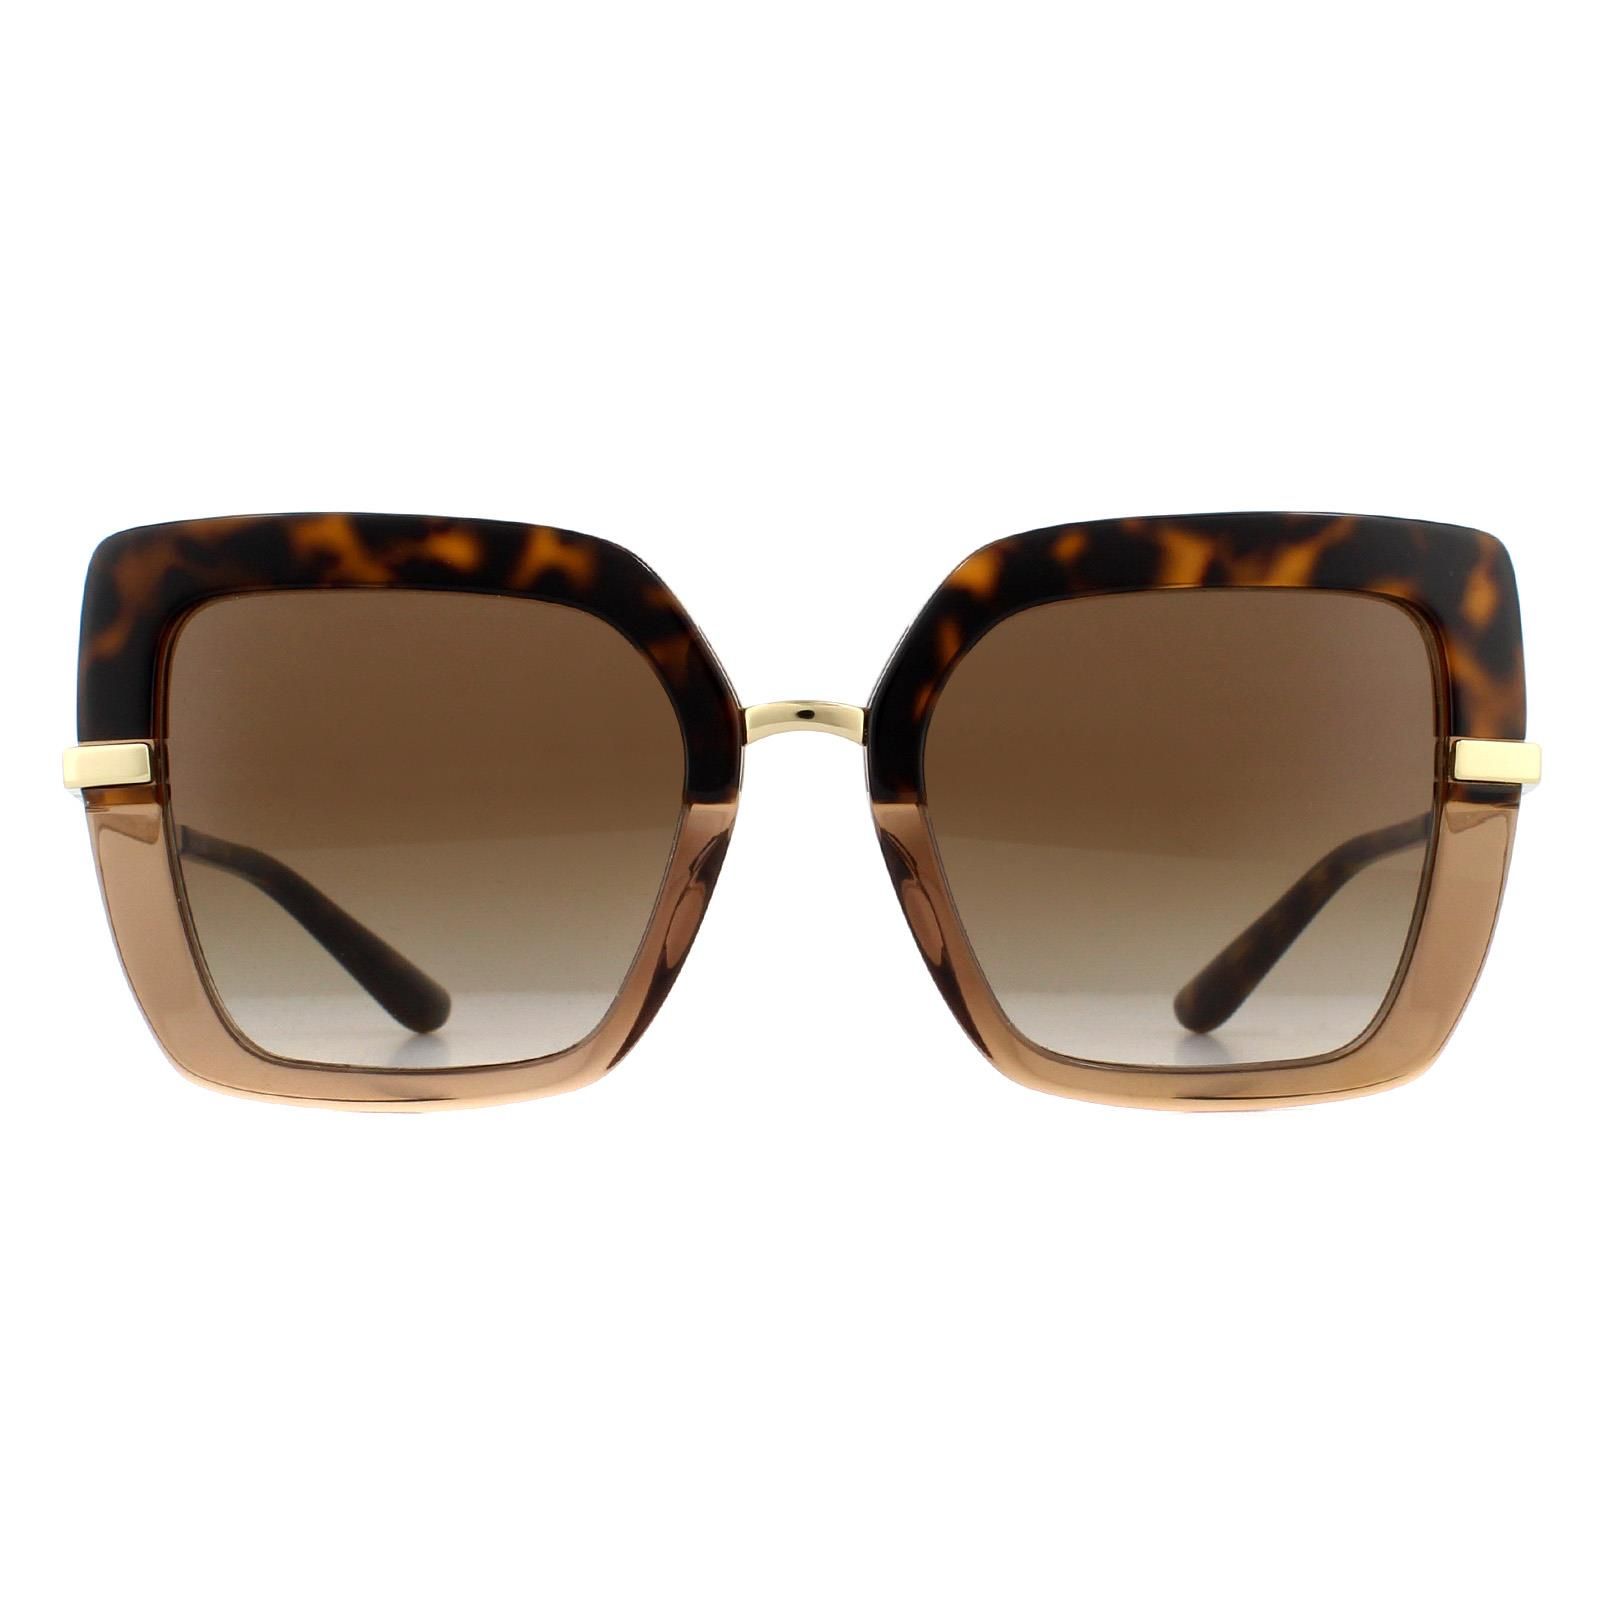 Dolce & Gabbana Sunglasses DG4373 325613 Top Havana on Transparent ...